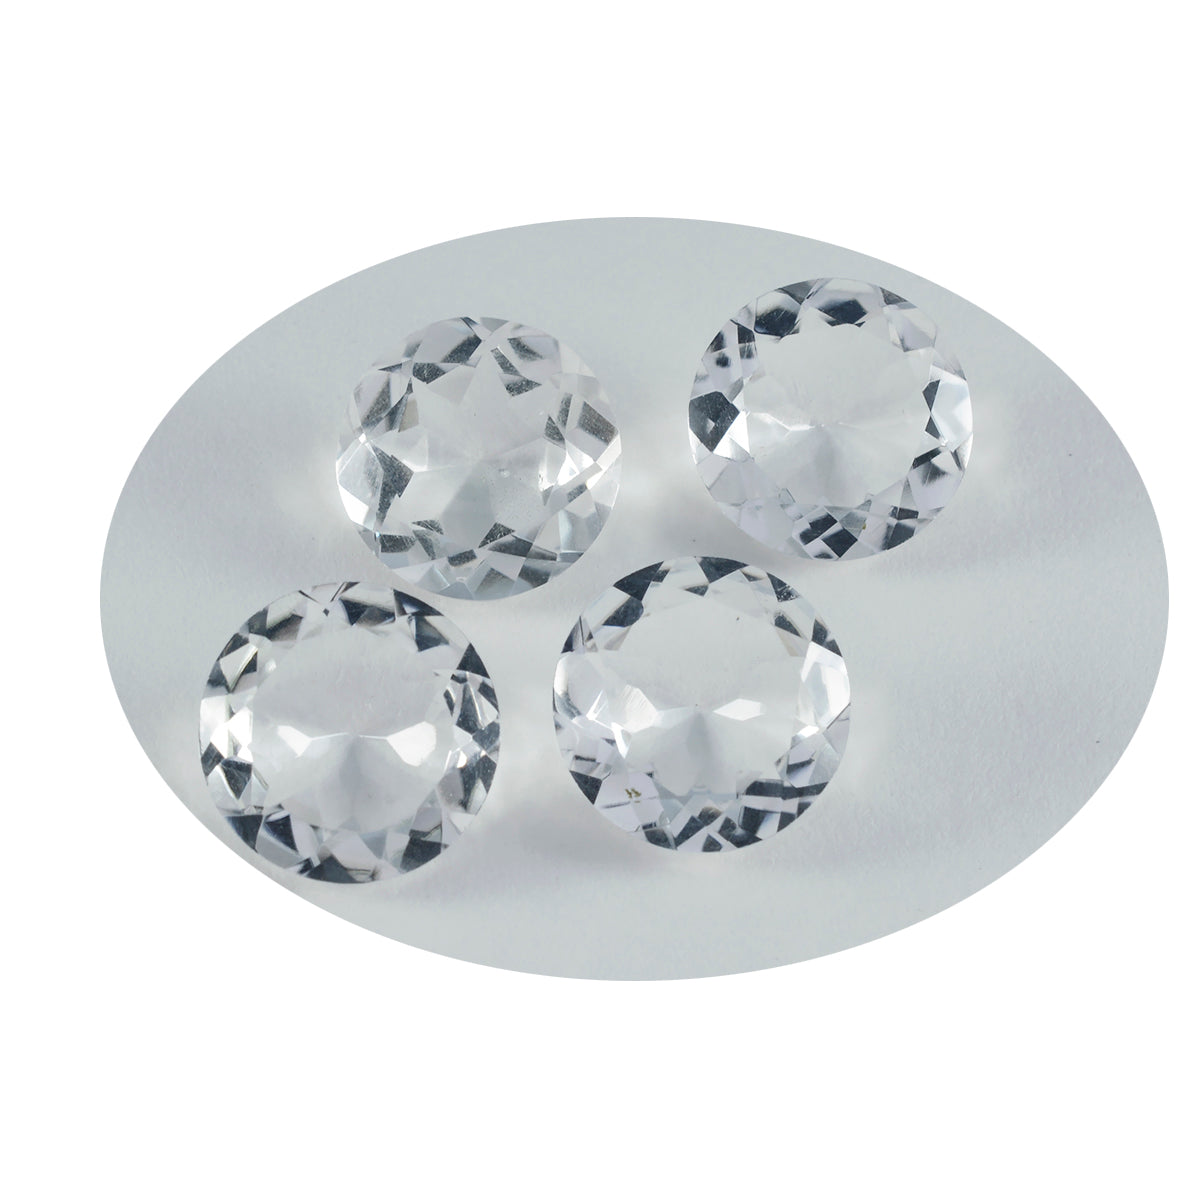 riyogems 1шт белые кристаллы кварца ограненные 13х13 мм круглые камни хорошего качества